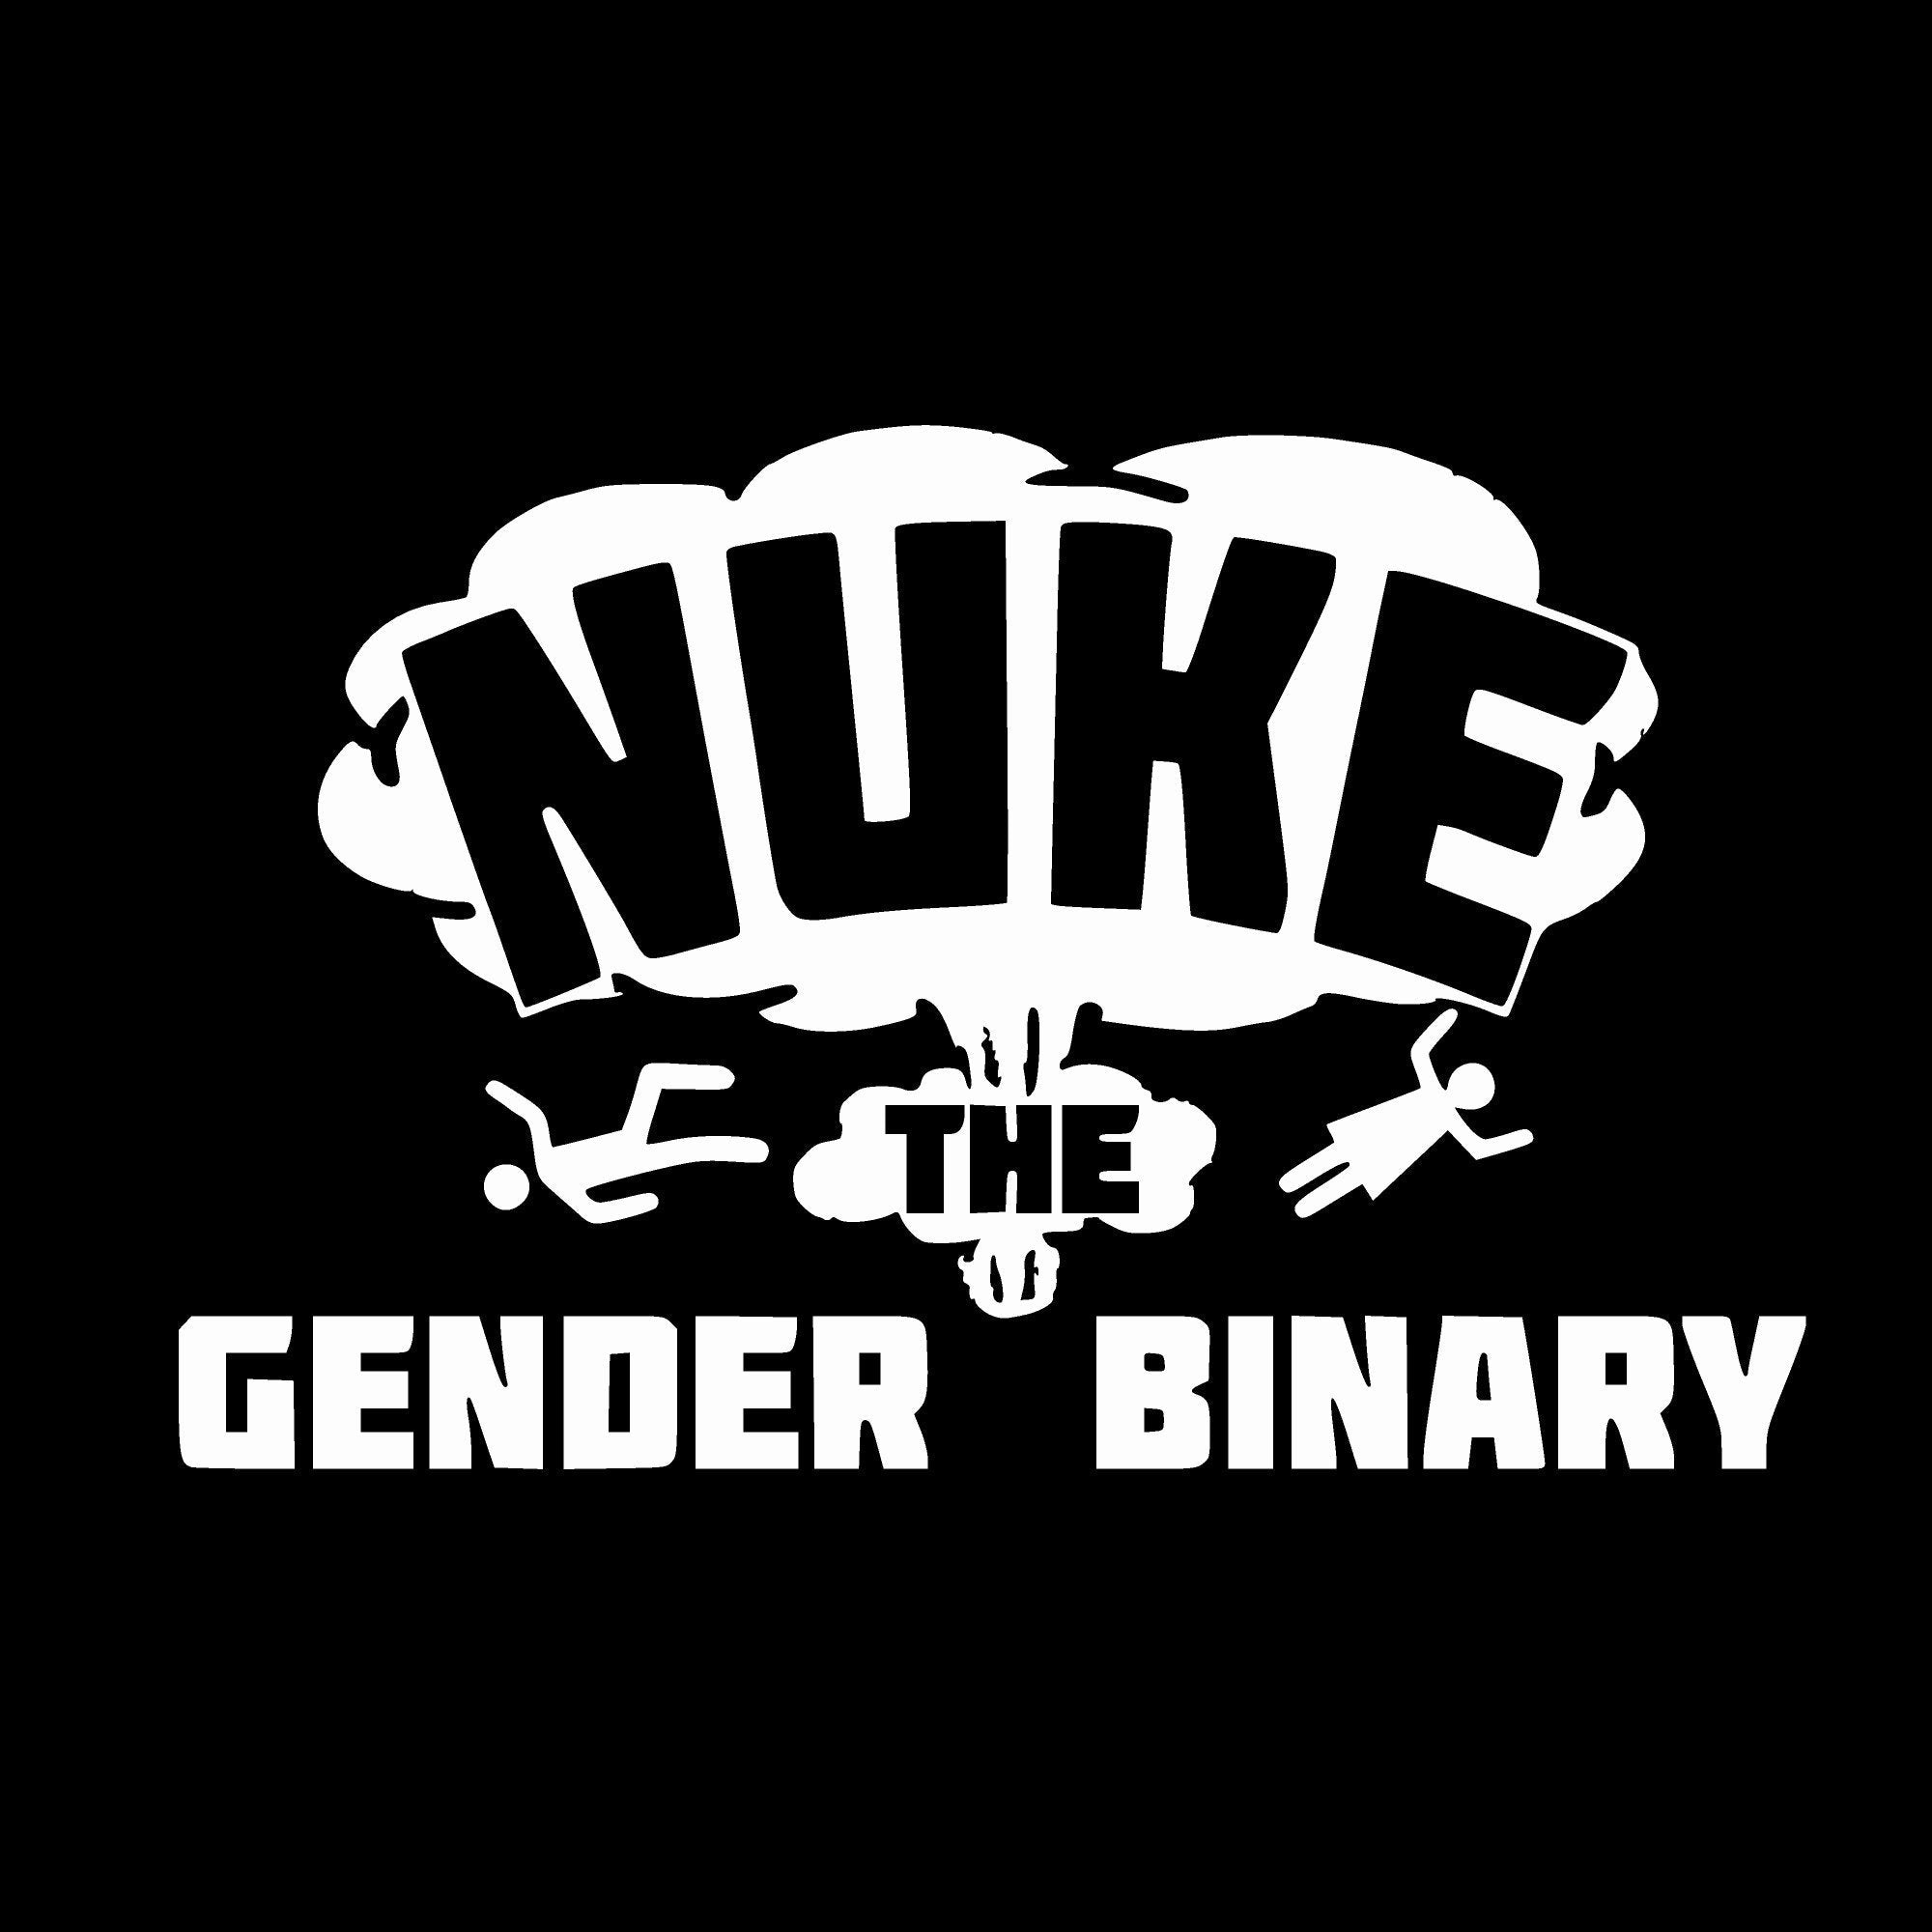 gender,gender_binary,non-binary,queer,lgbt,lgbtq,nonbinary,agender,transgender,trans,genderqueer,gender_fluid,gay